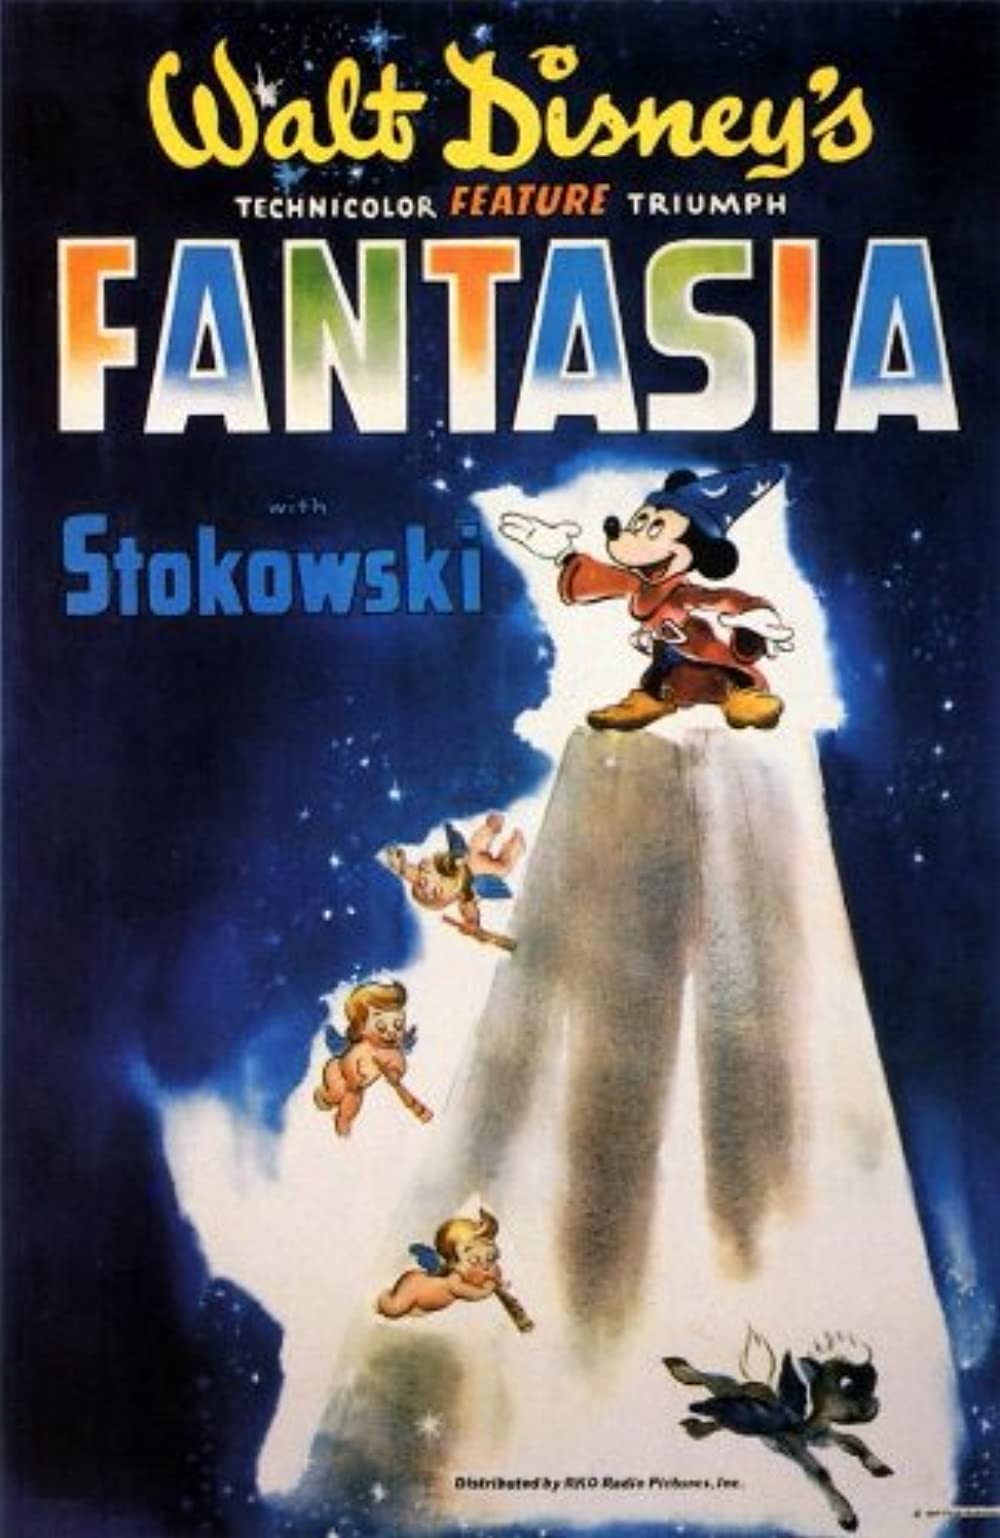 Filmbeschreibung zu Fantasia (1940)